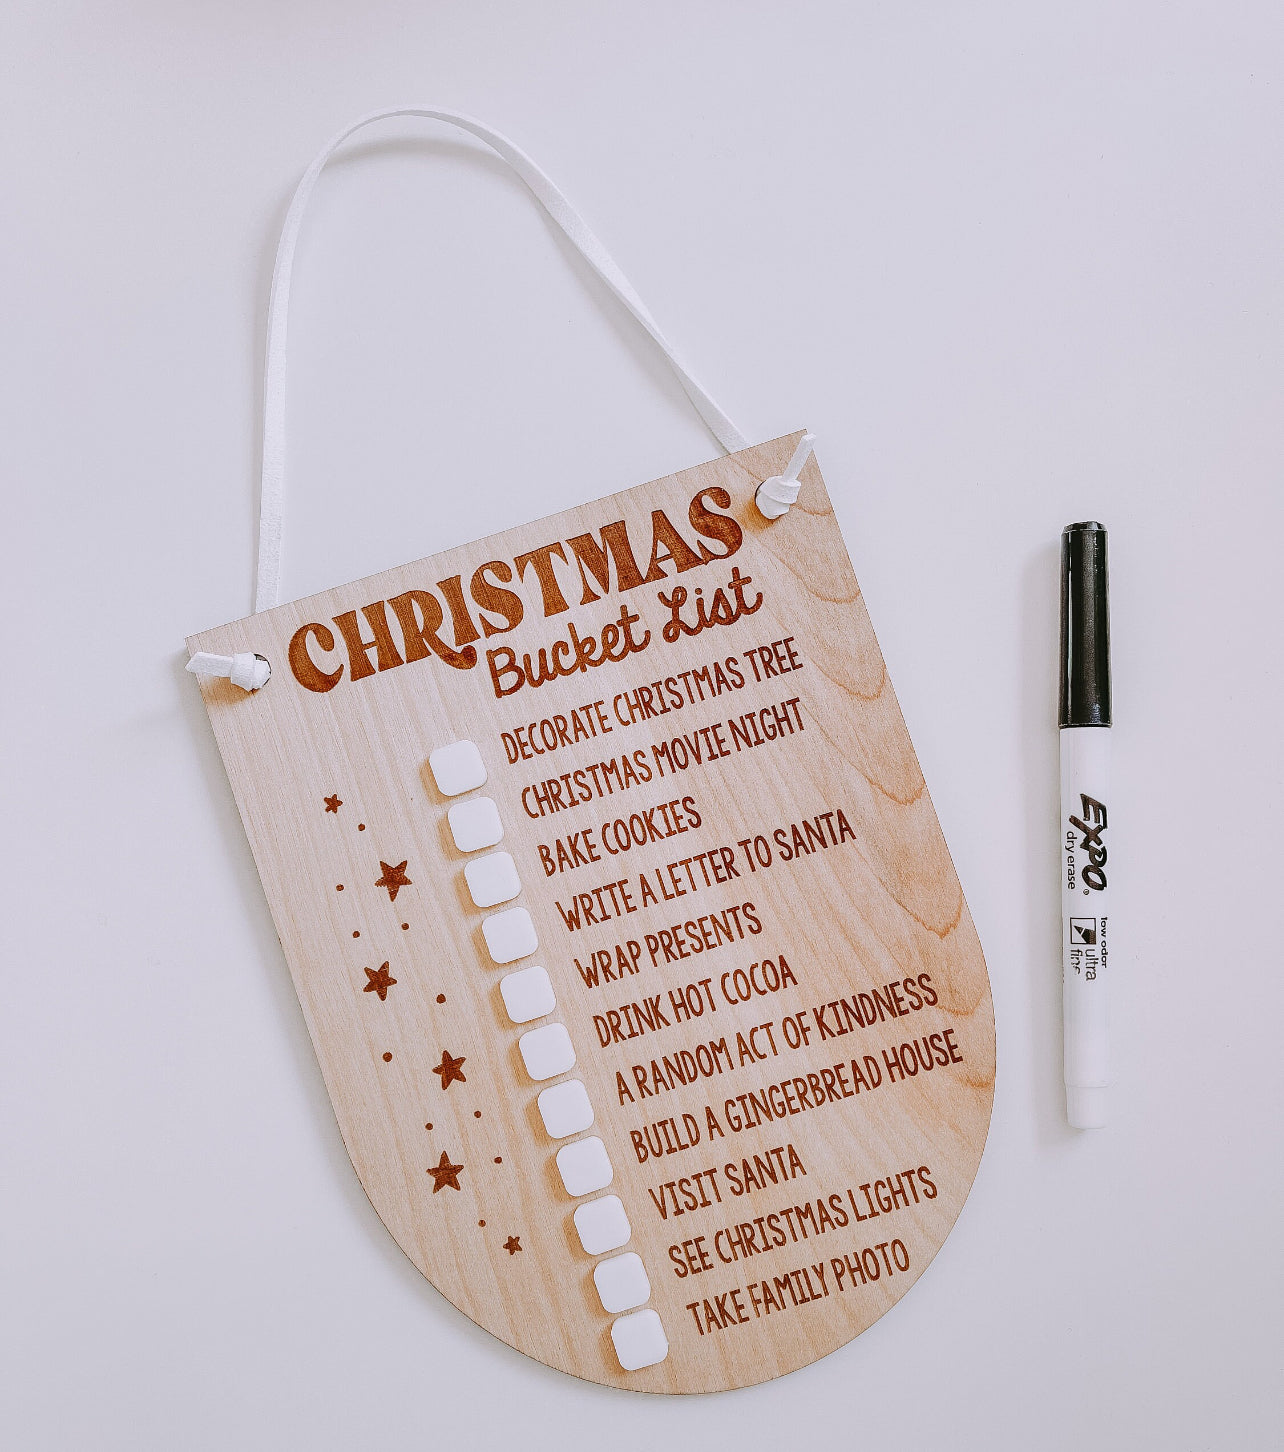 Christmas Bucket List